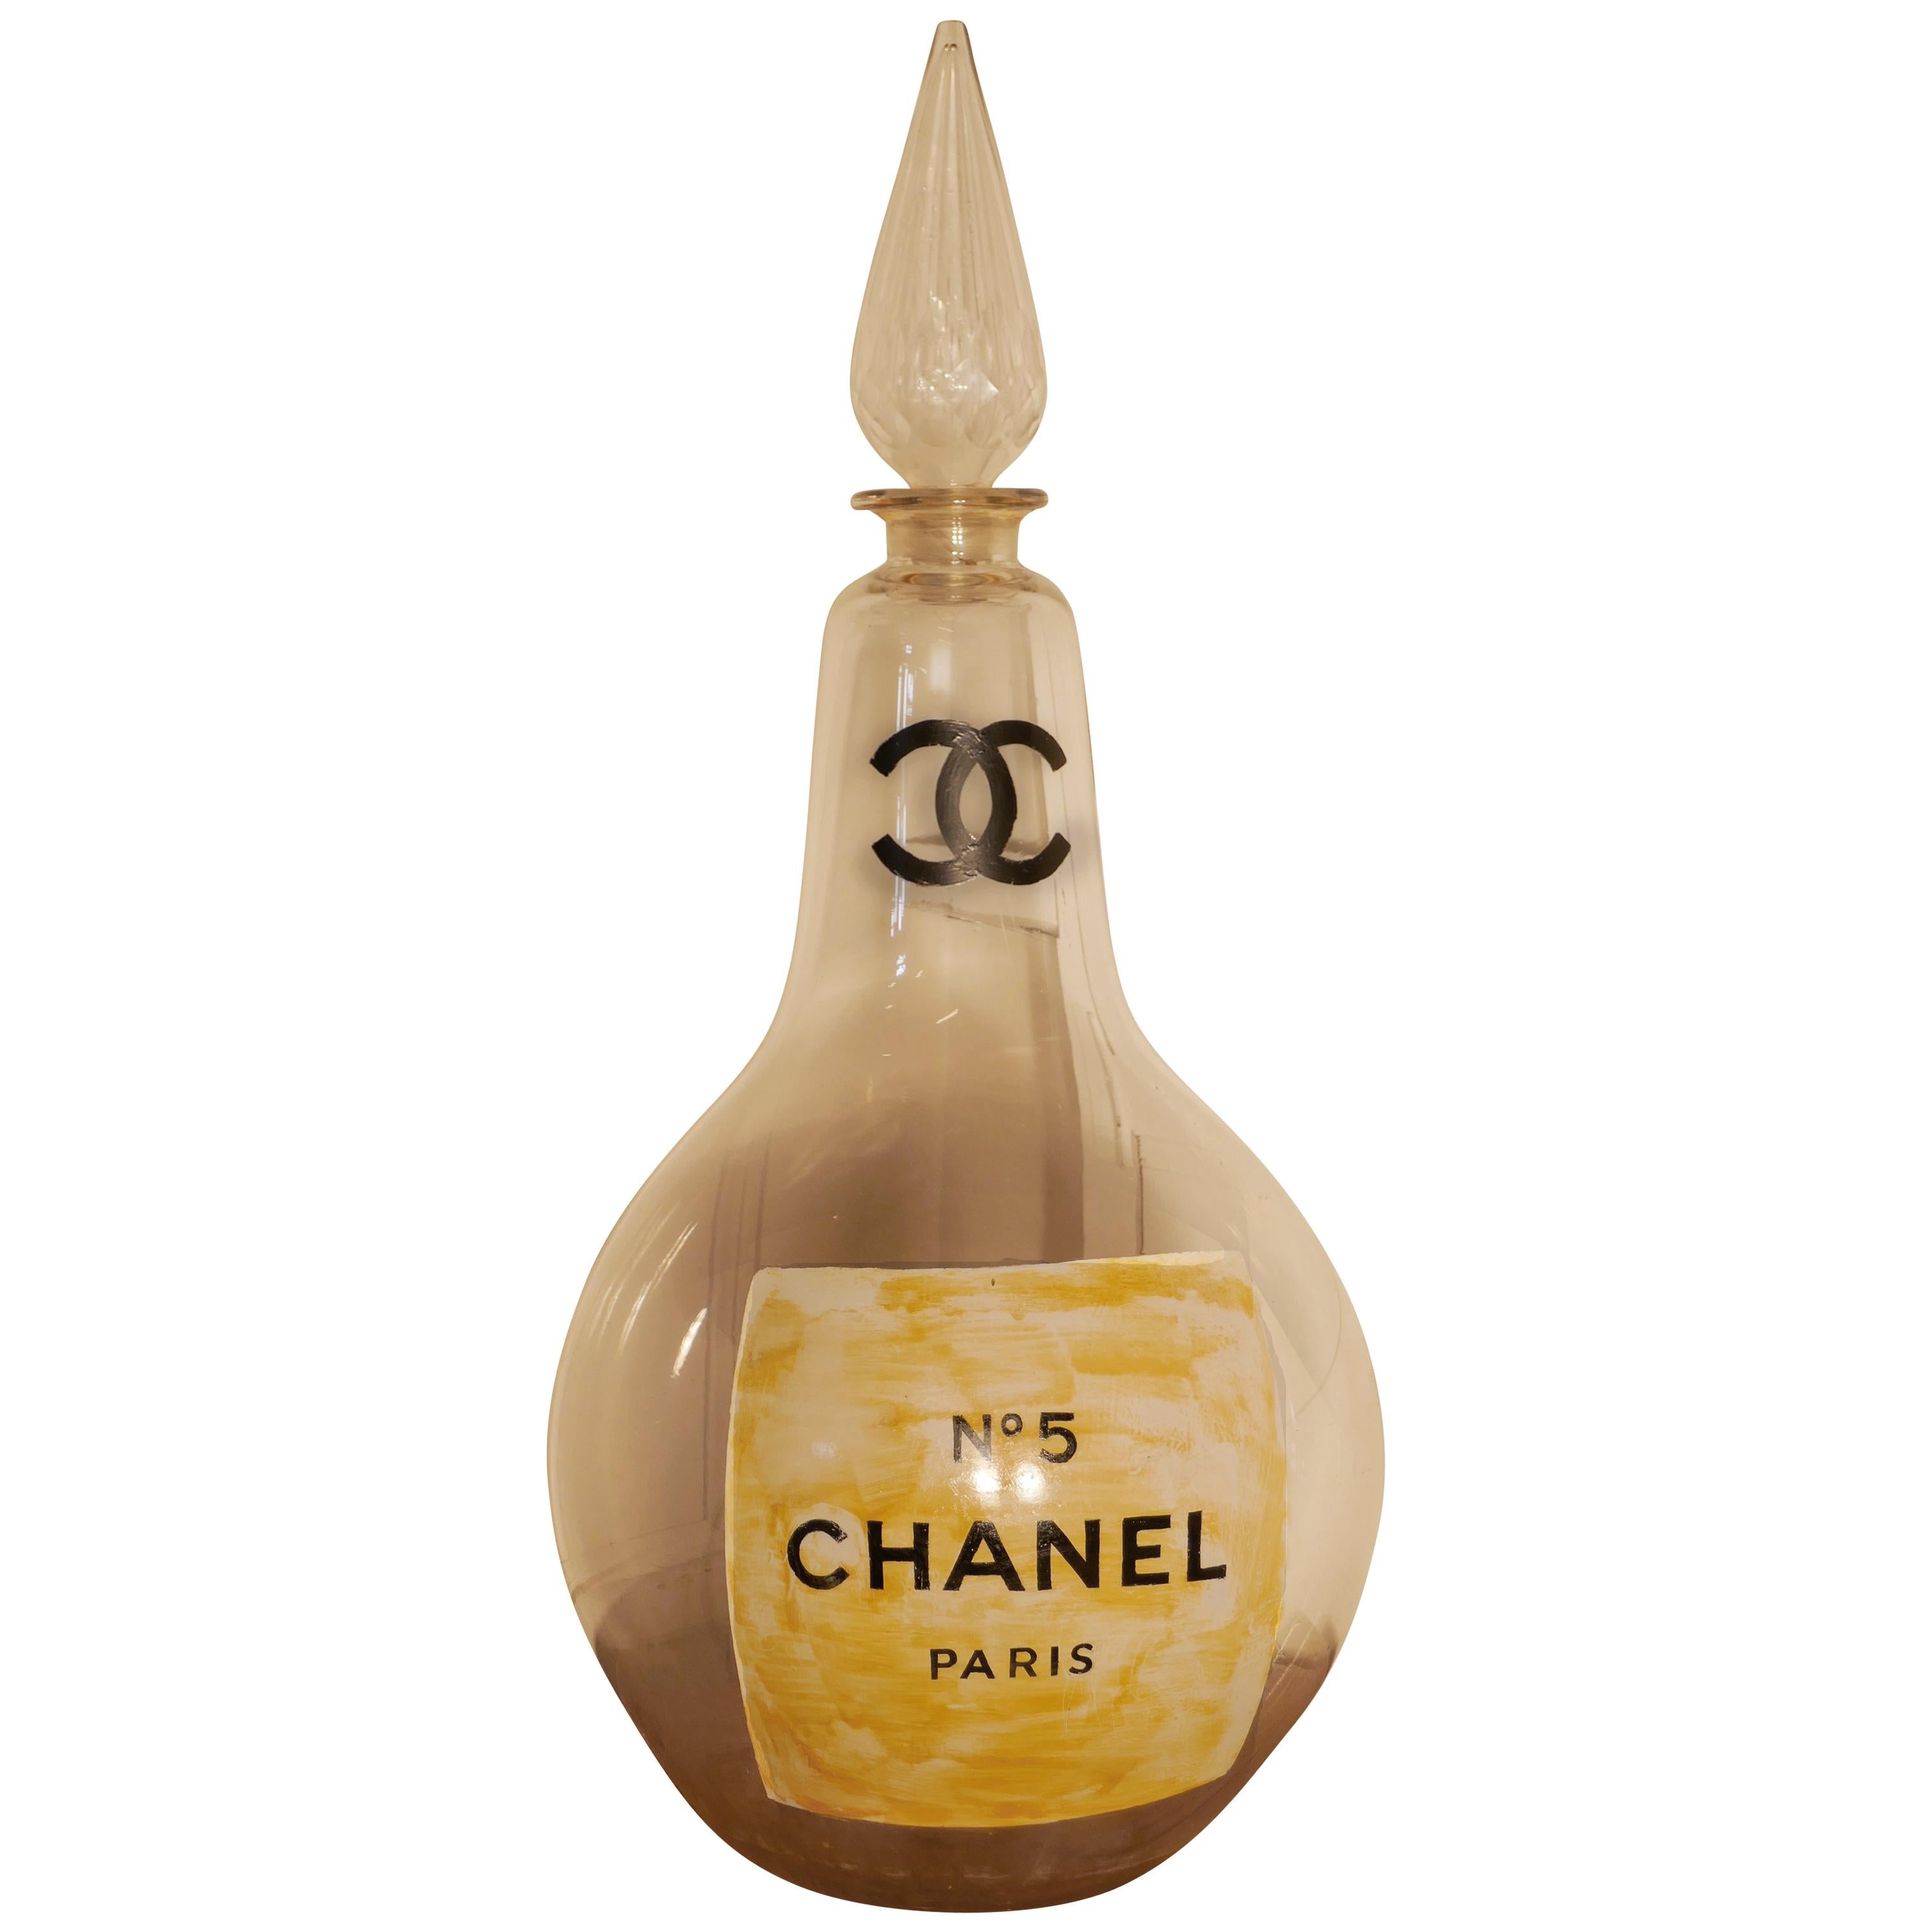 Very Large Perfume Bottle Chanel No5 Paris